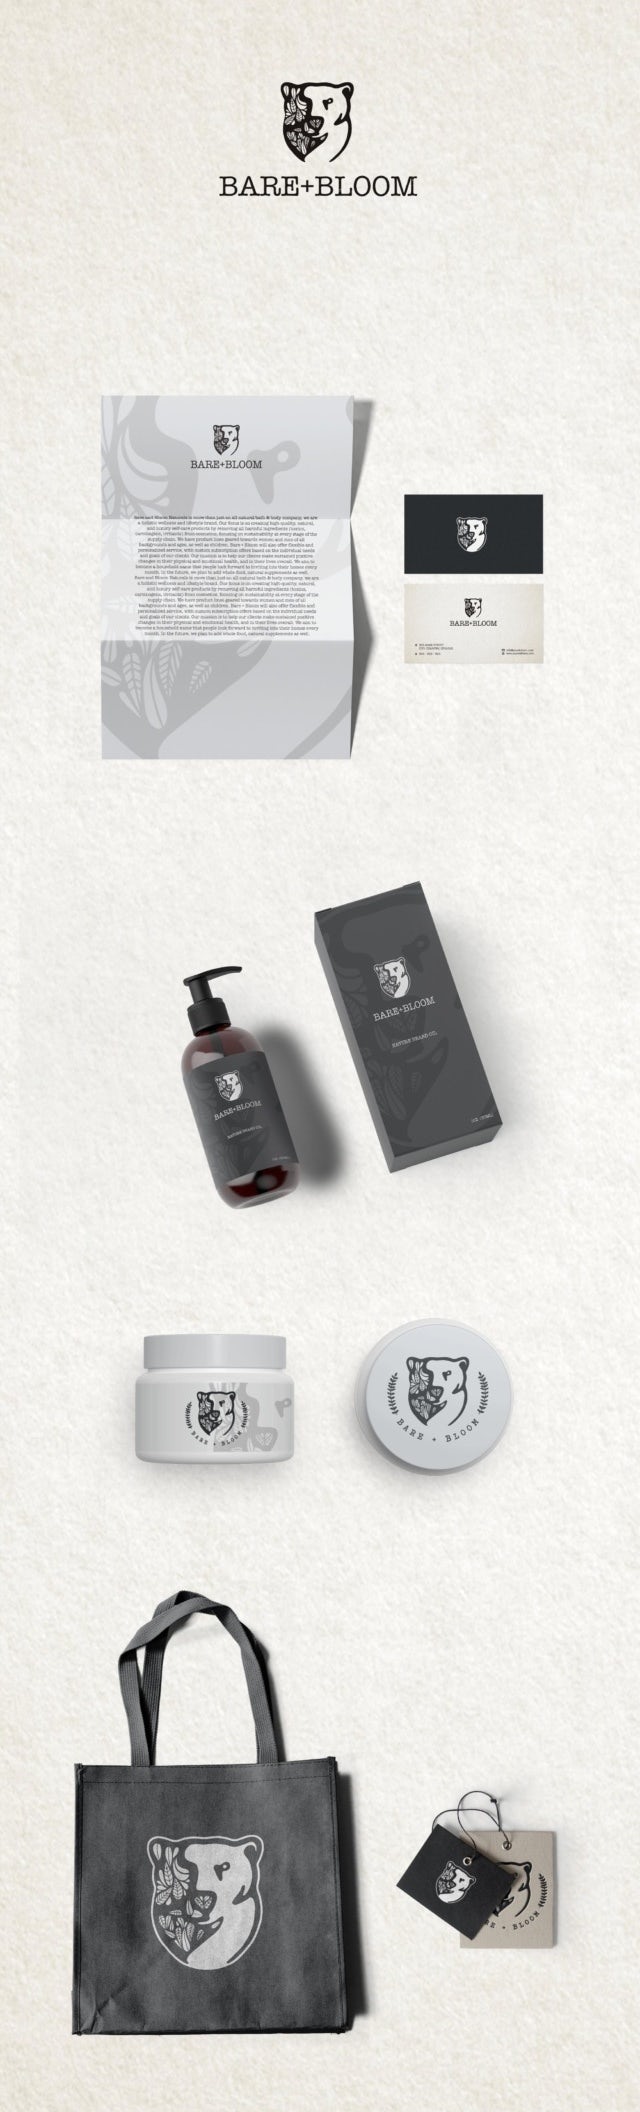 simple, cool, monochrome cosmetics branding